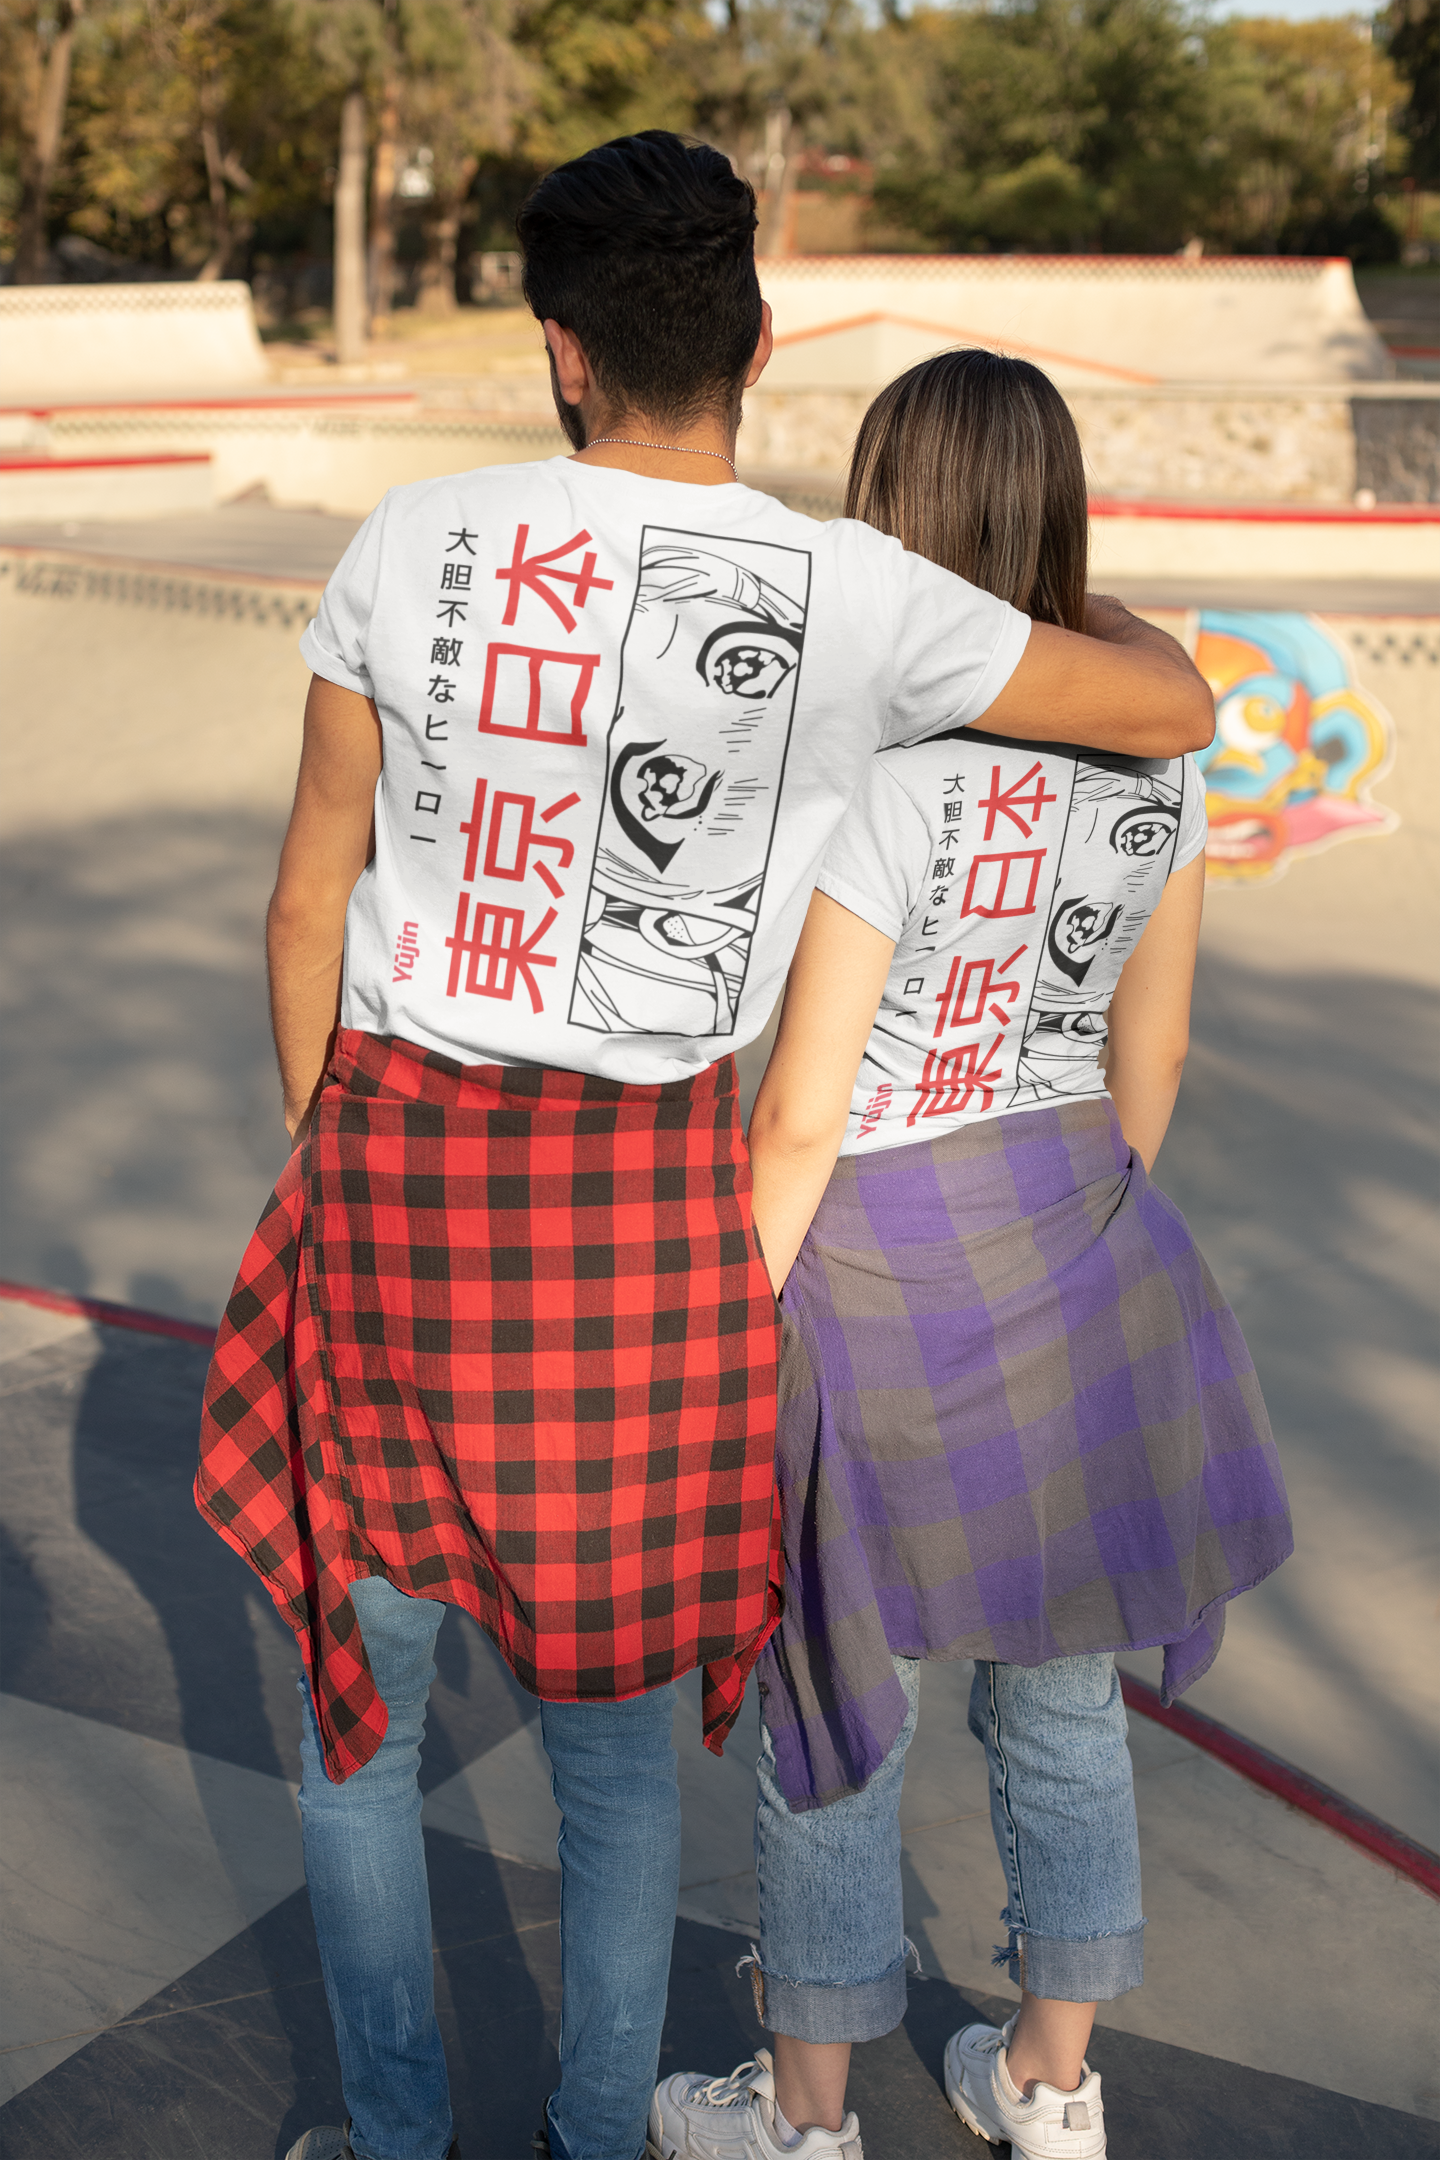 Baki Hanma Fight Stance T-Shirt  Yūjin Japanese Anime Streetwear